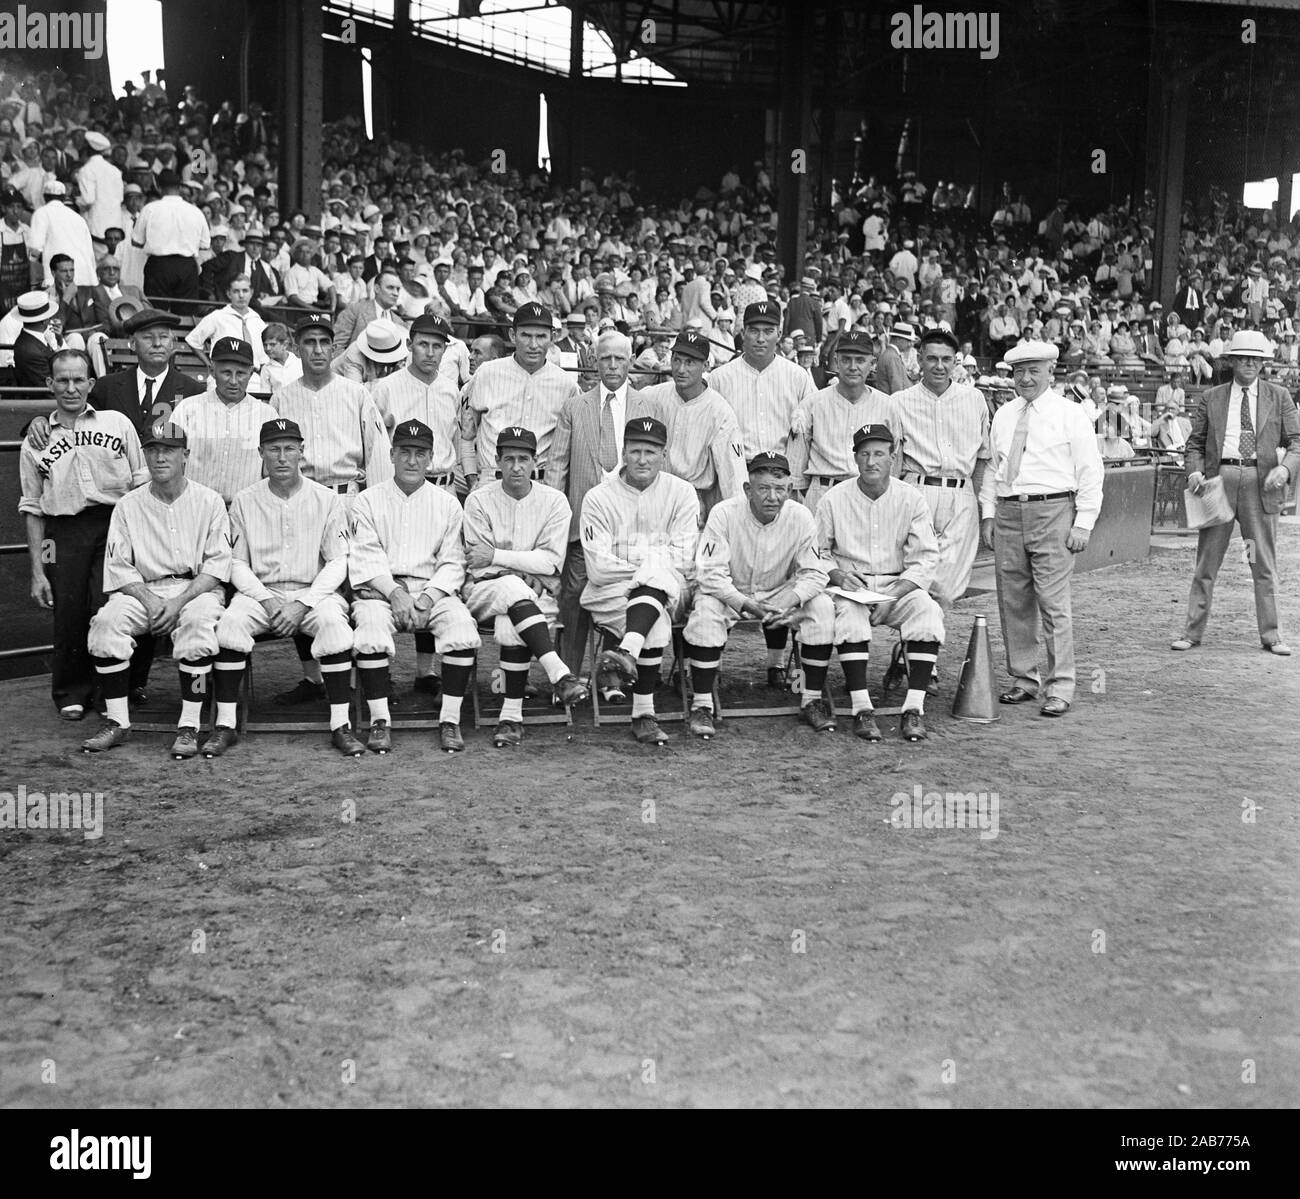 Washington baseball team 1930s hires stock photography and images Alamy